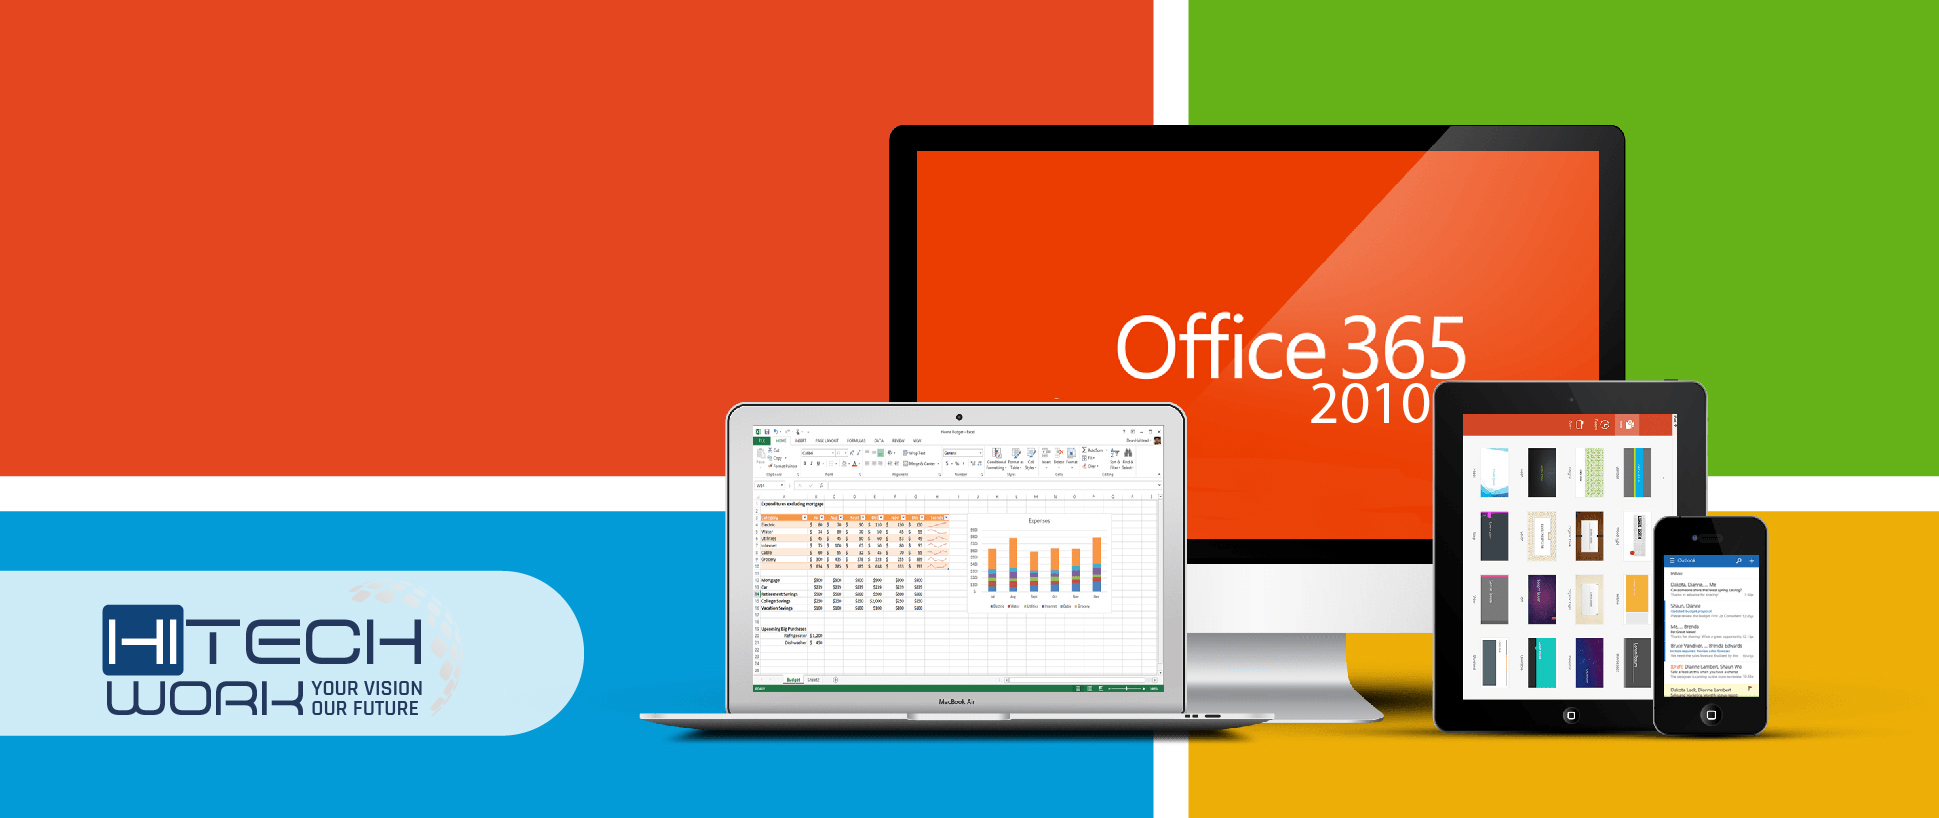 Microsoft Office Professional 2010 Product Key